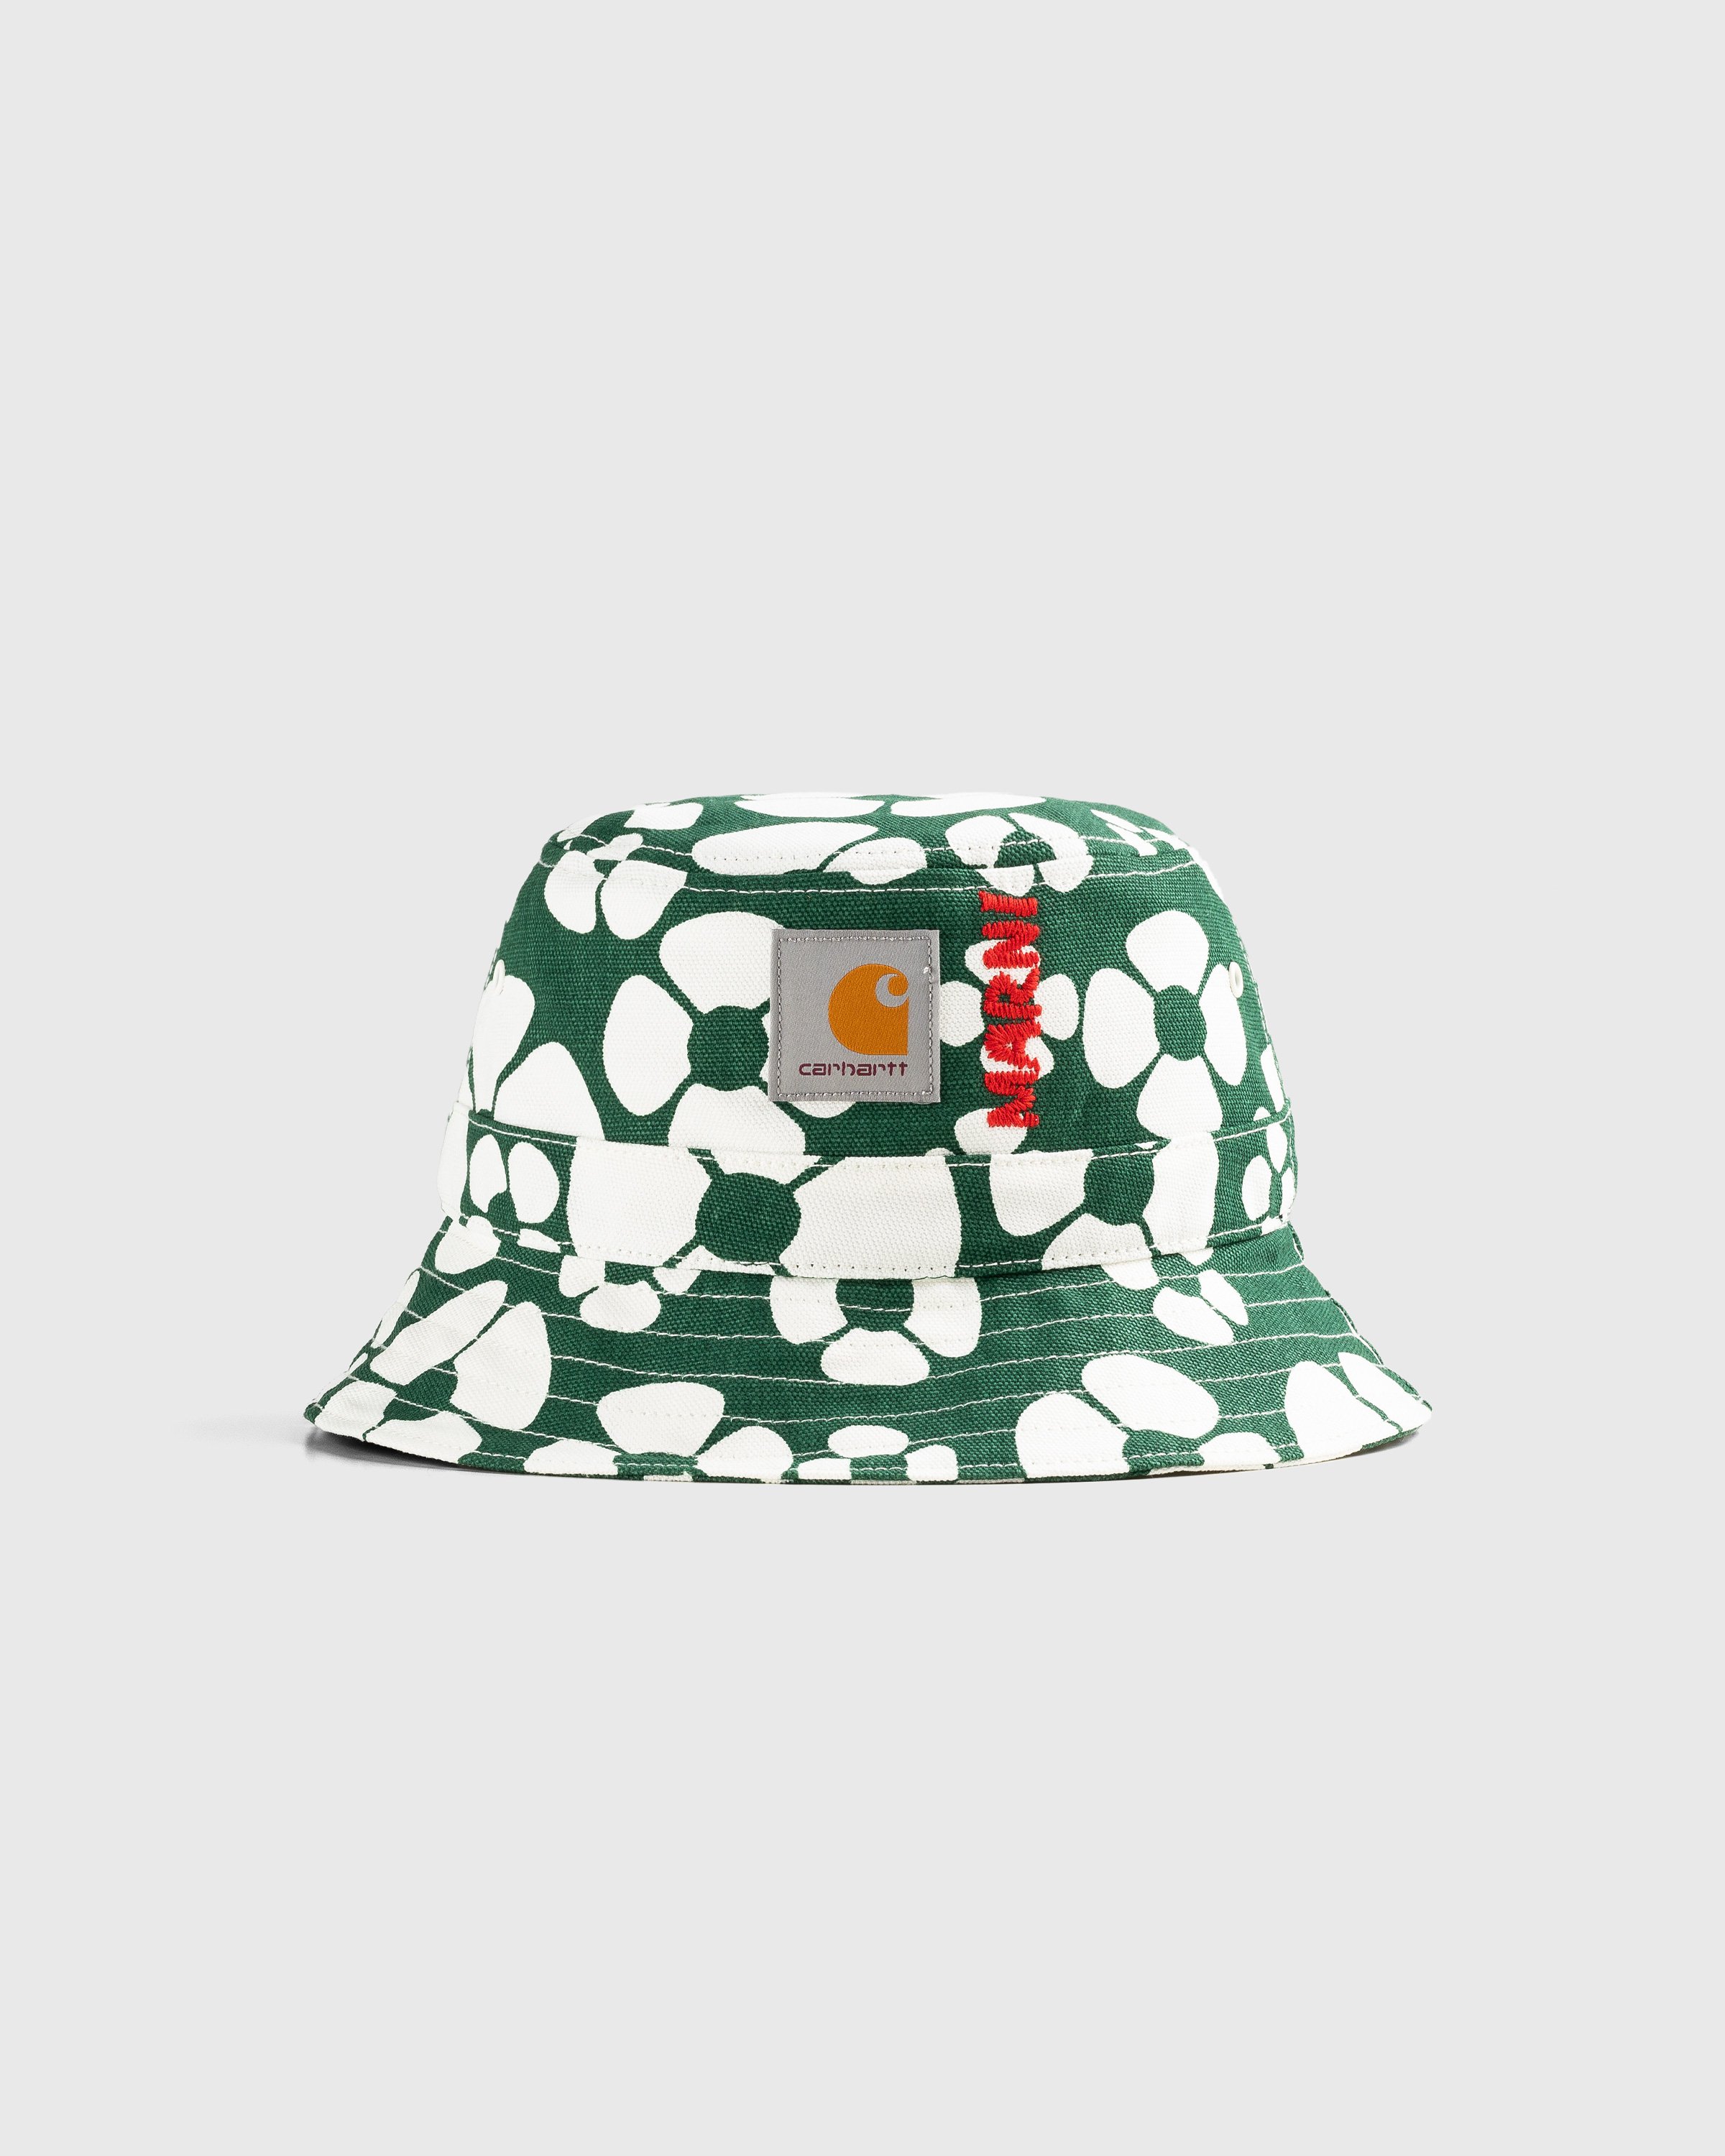 Marni x Carhartt WIP - Floral Bucket Hat Green - Accessories - Green - Image 1